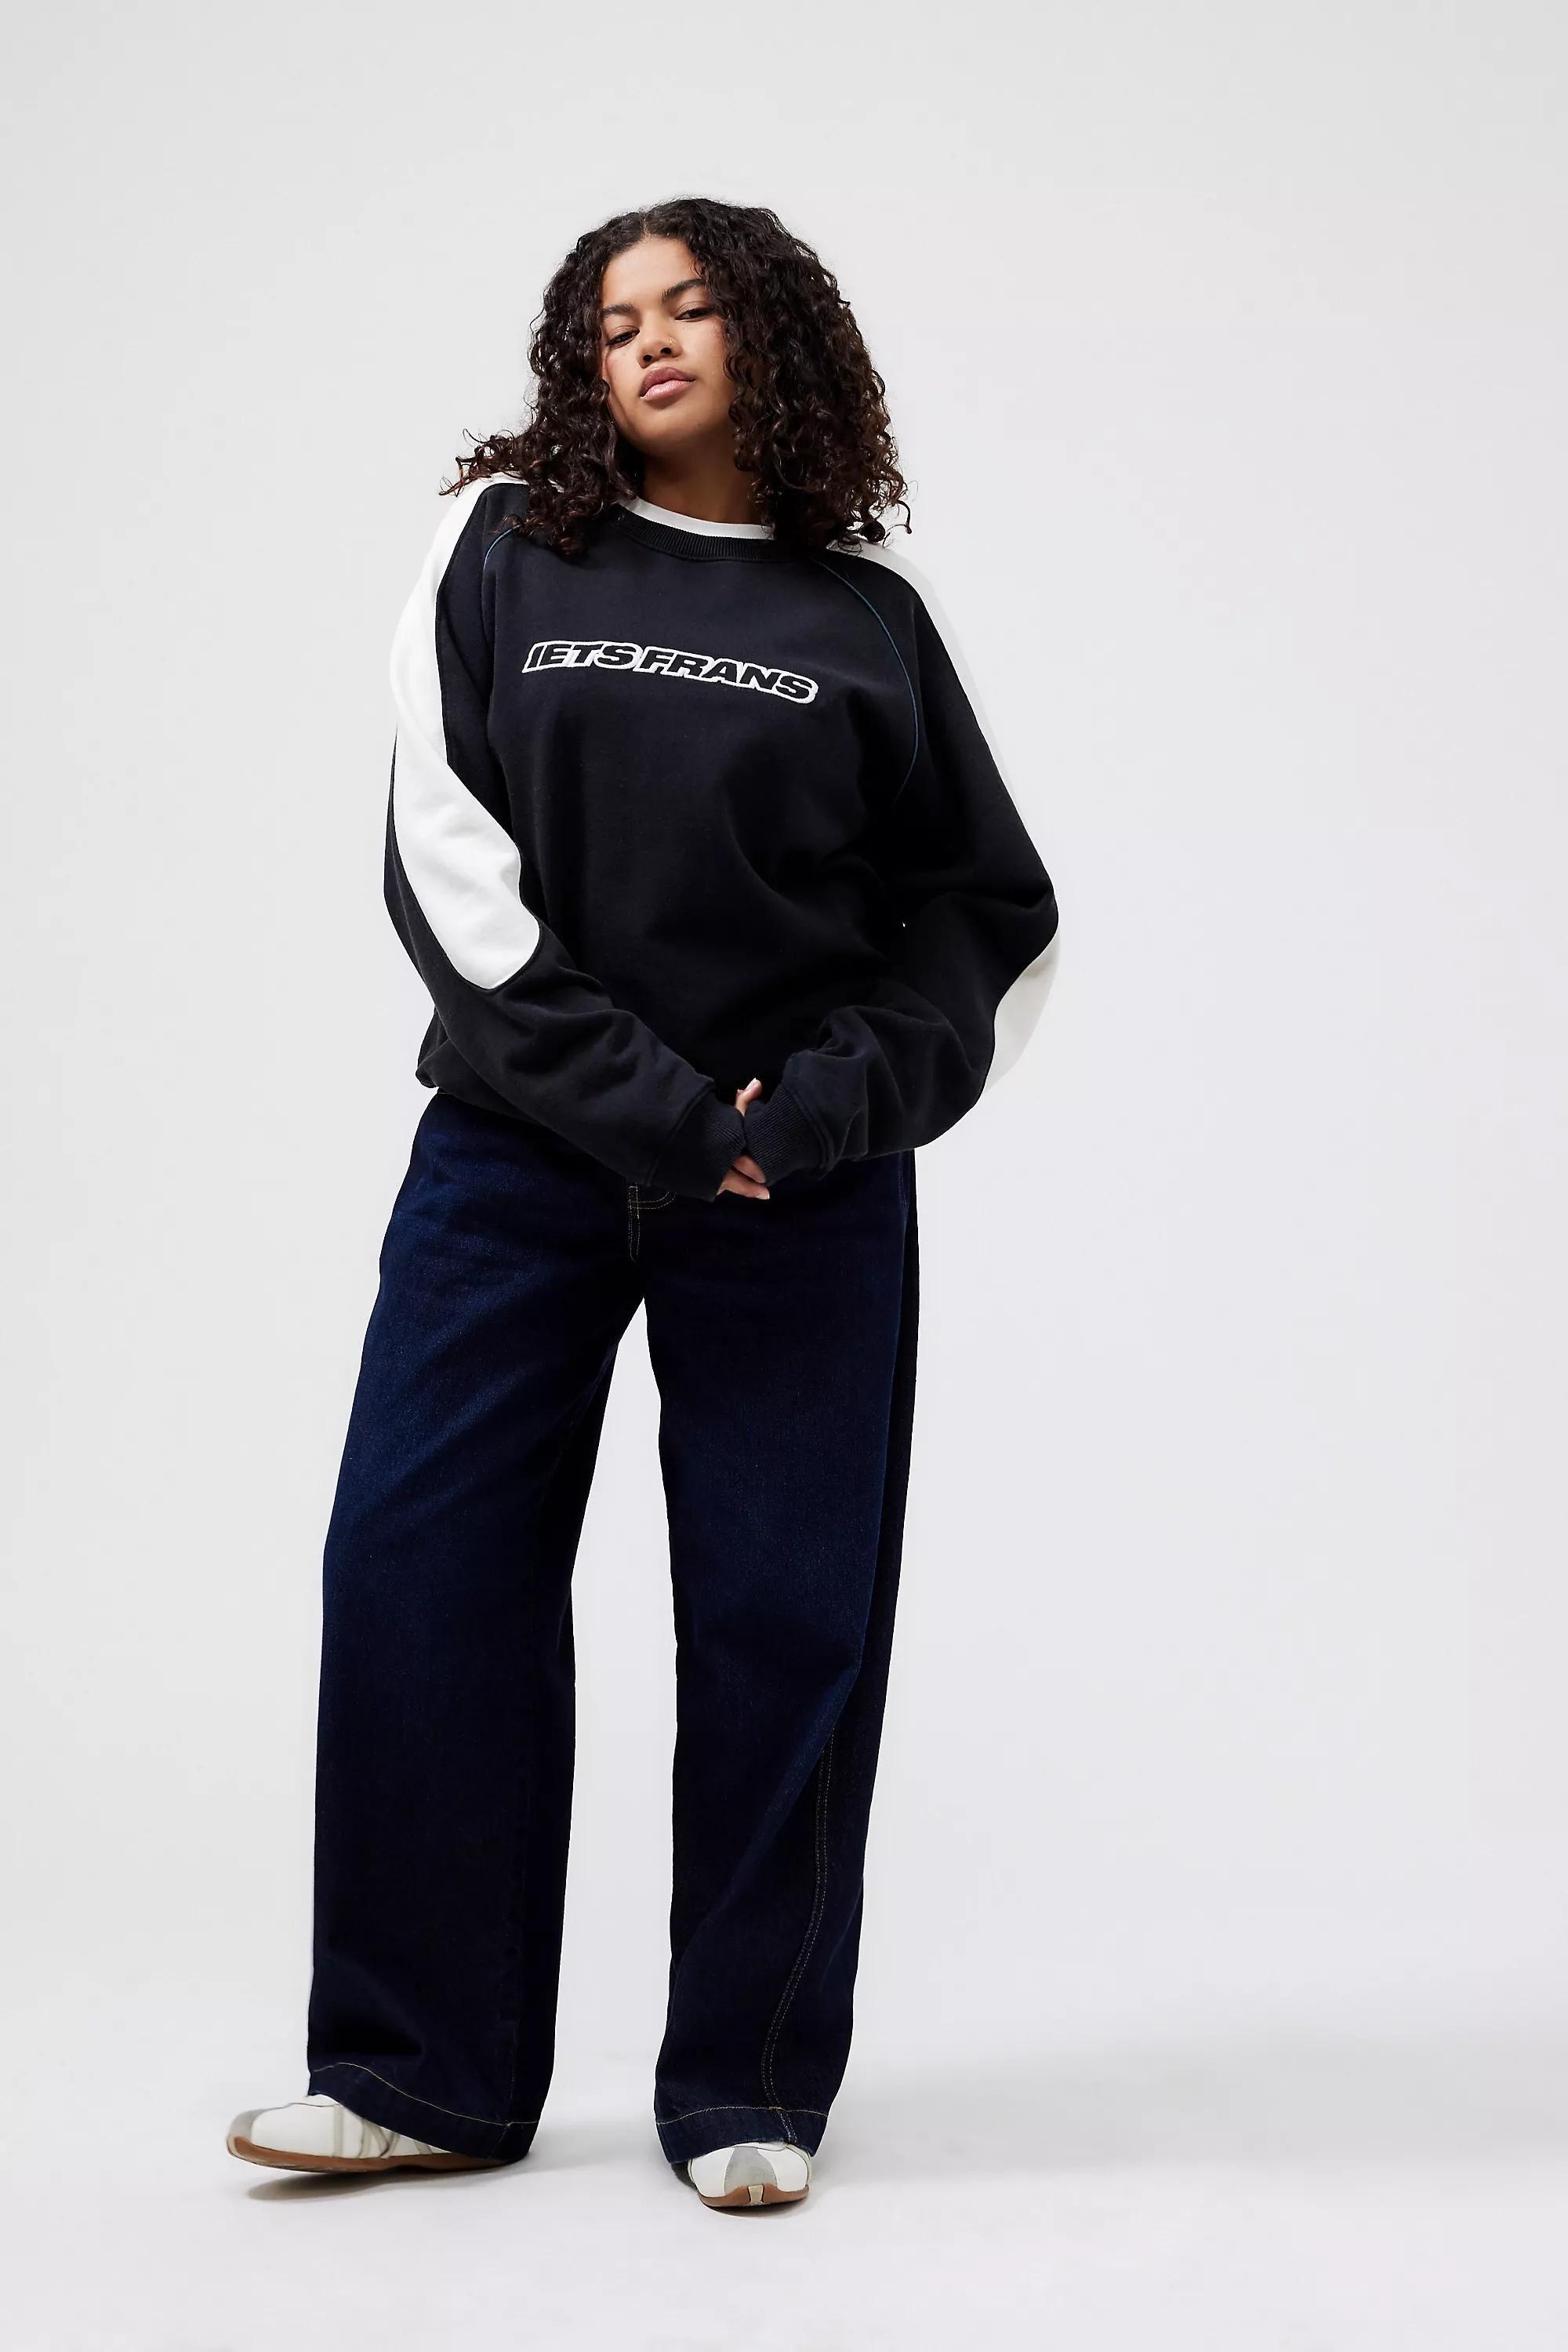 Urban Outfitters - Black Panel Sweatshirt